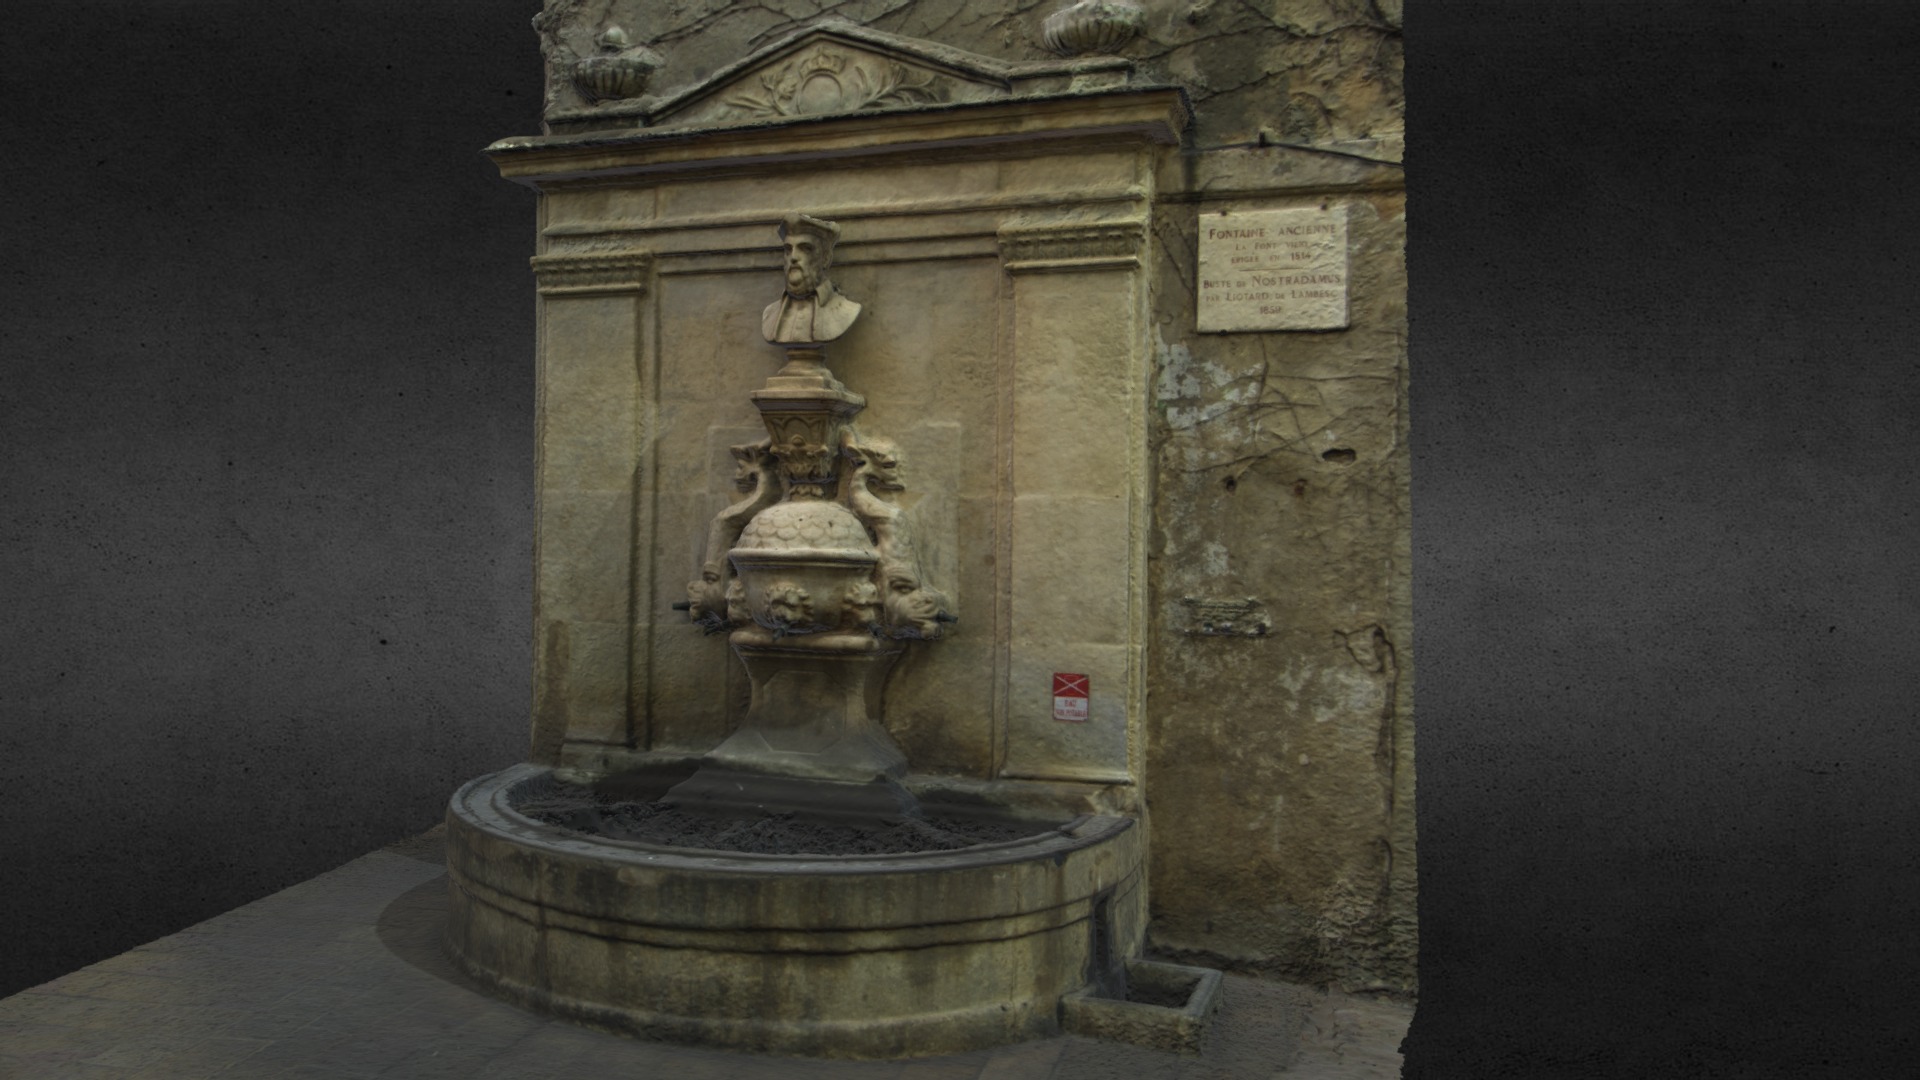 3D model Nostradamus Fountain in Saint Rémy - This is a 3D model of the Nostradamus Fountain in Saint Rémy. The 3D model is about a stone pillar with a statue on top.